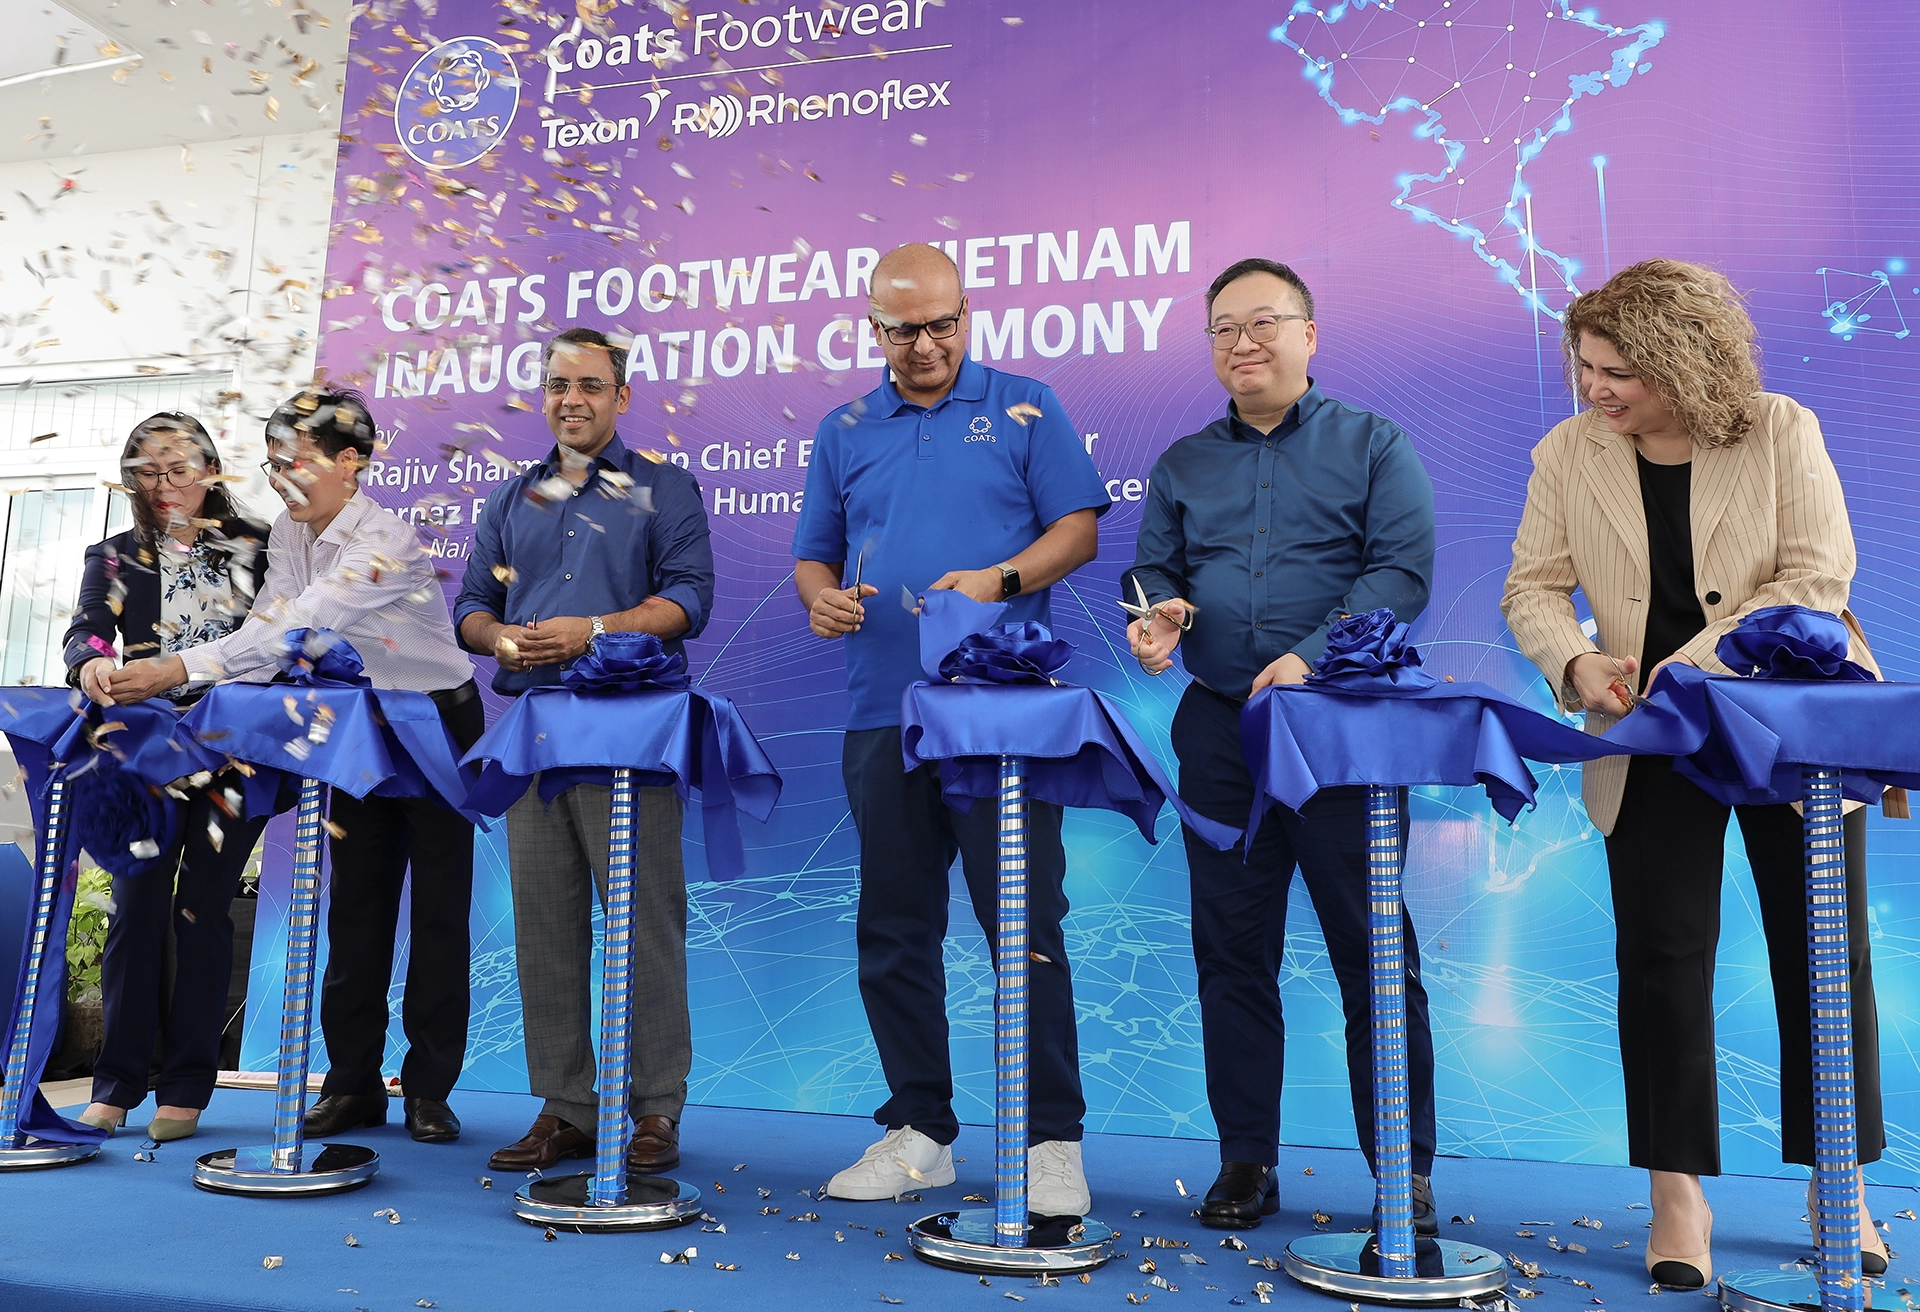 Coats Footwear Vietnam inauguration ceremony